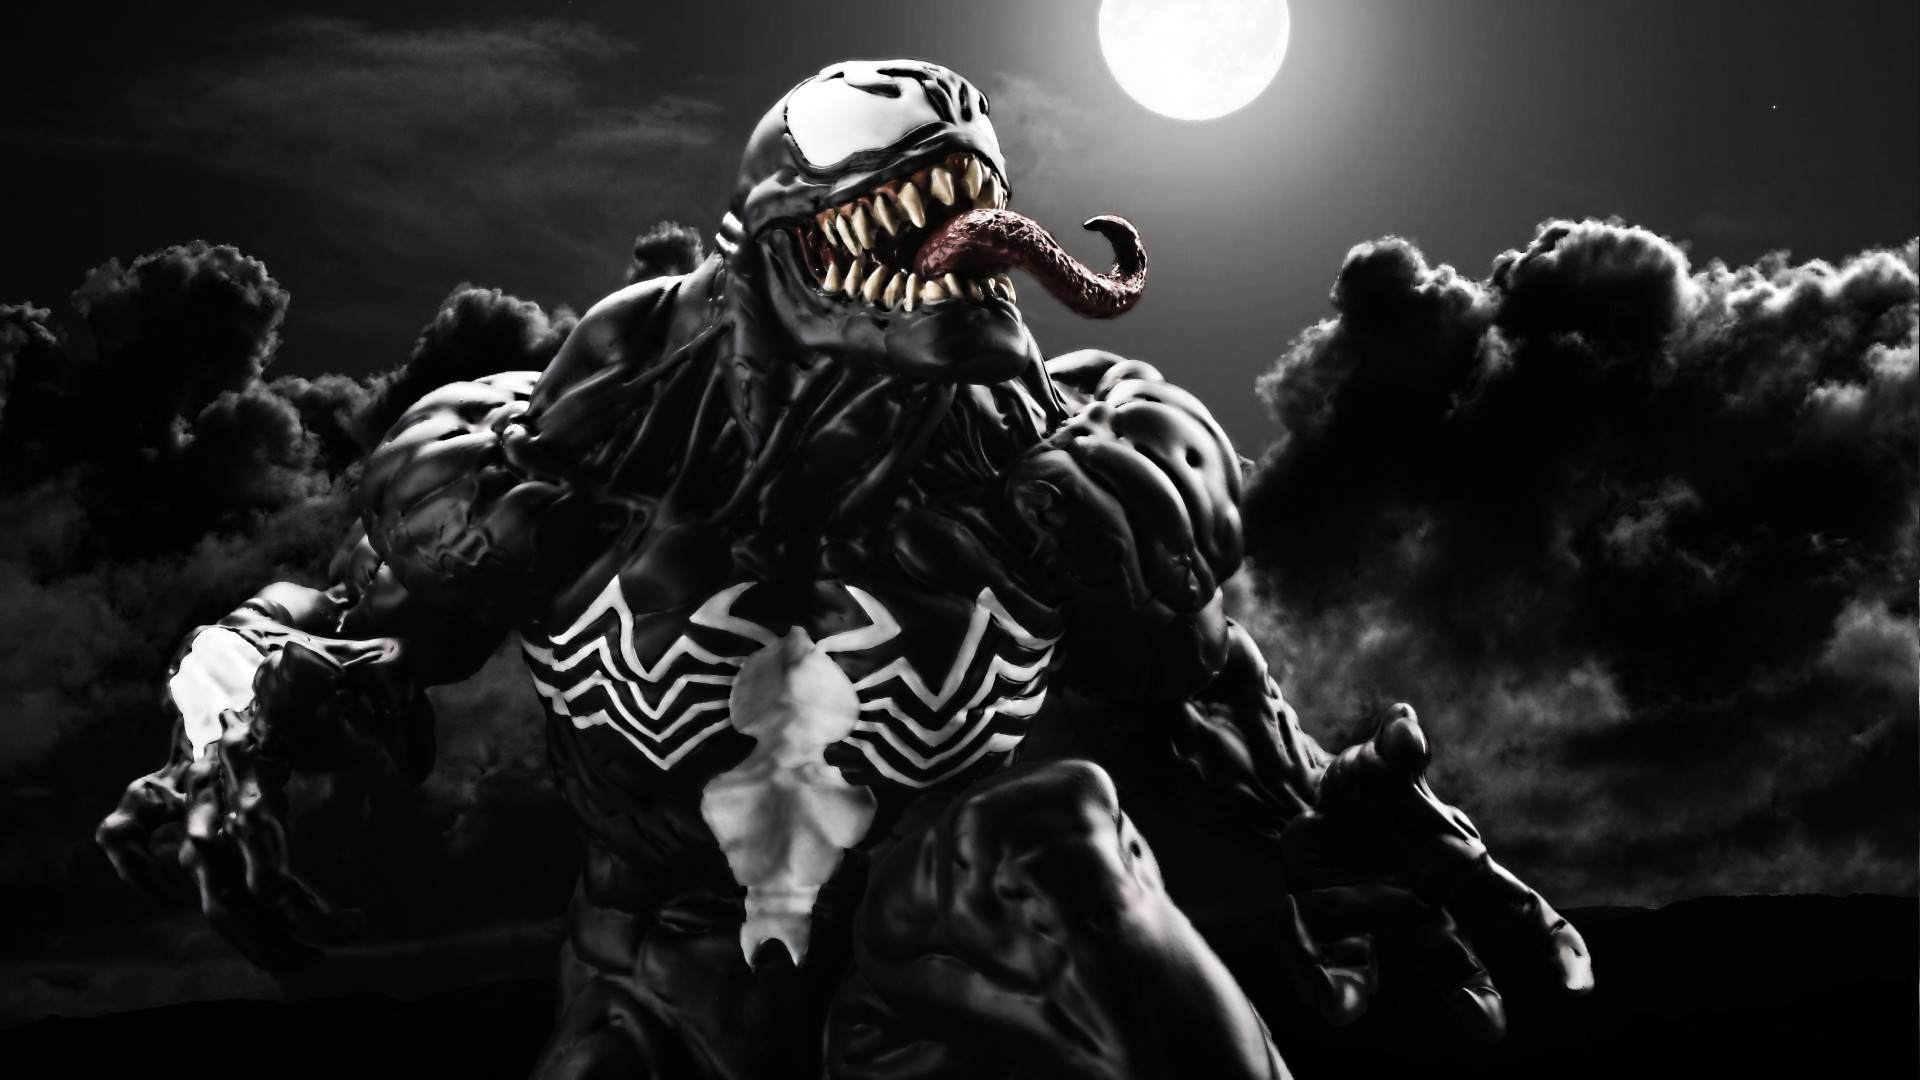 … agent venom wallpaper image gallery hcpr …